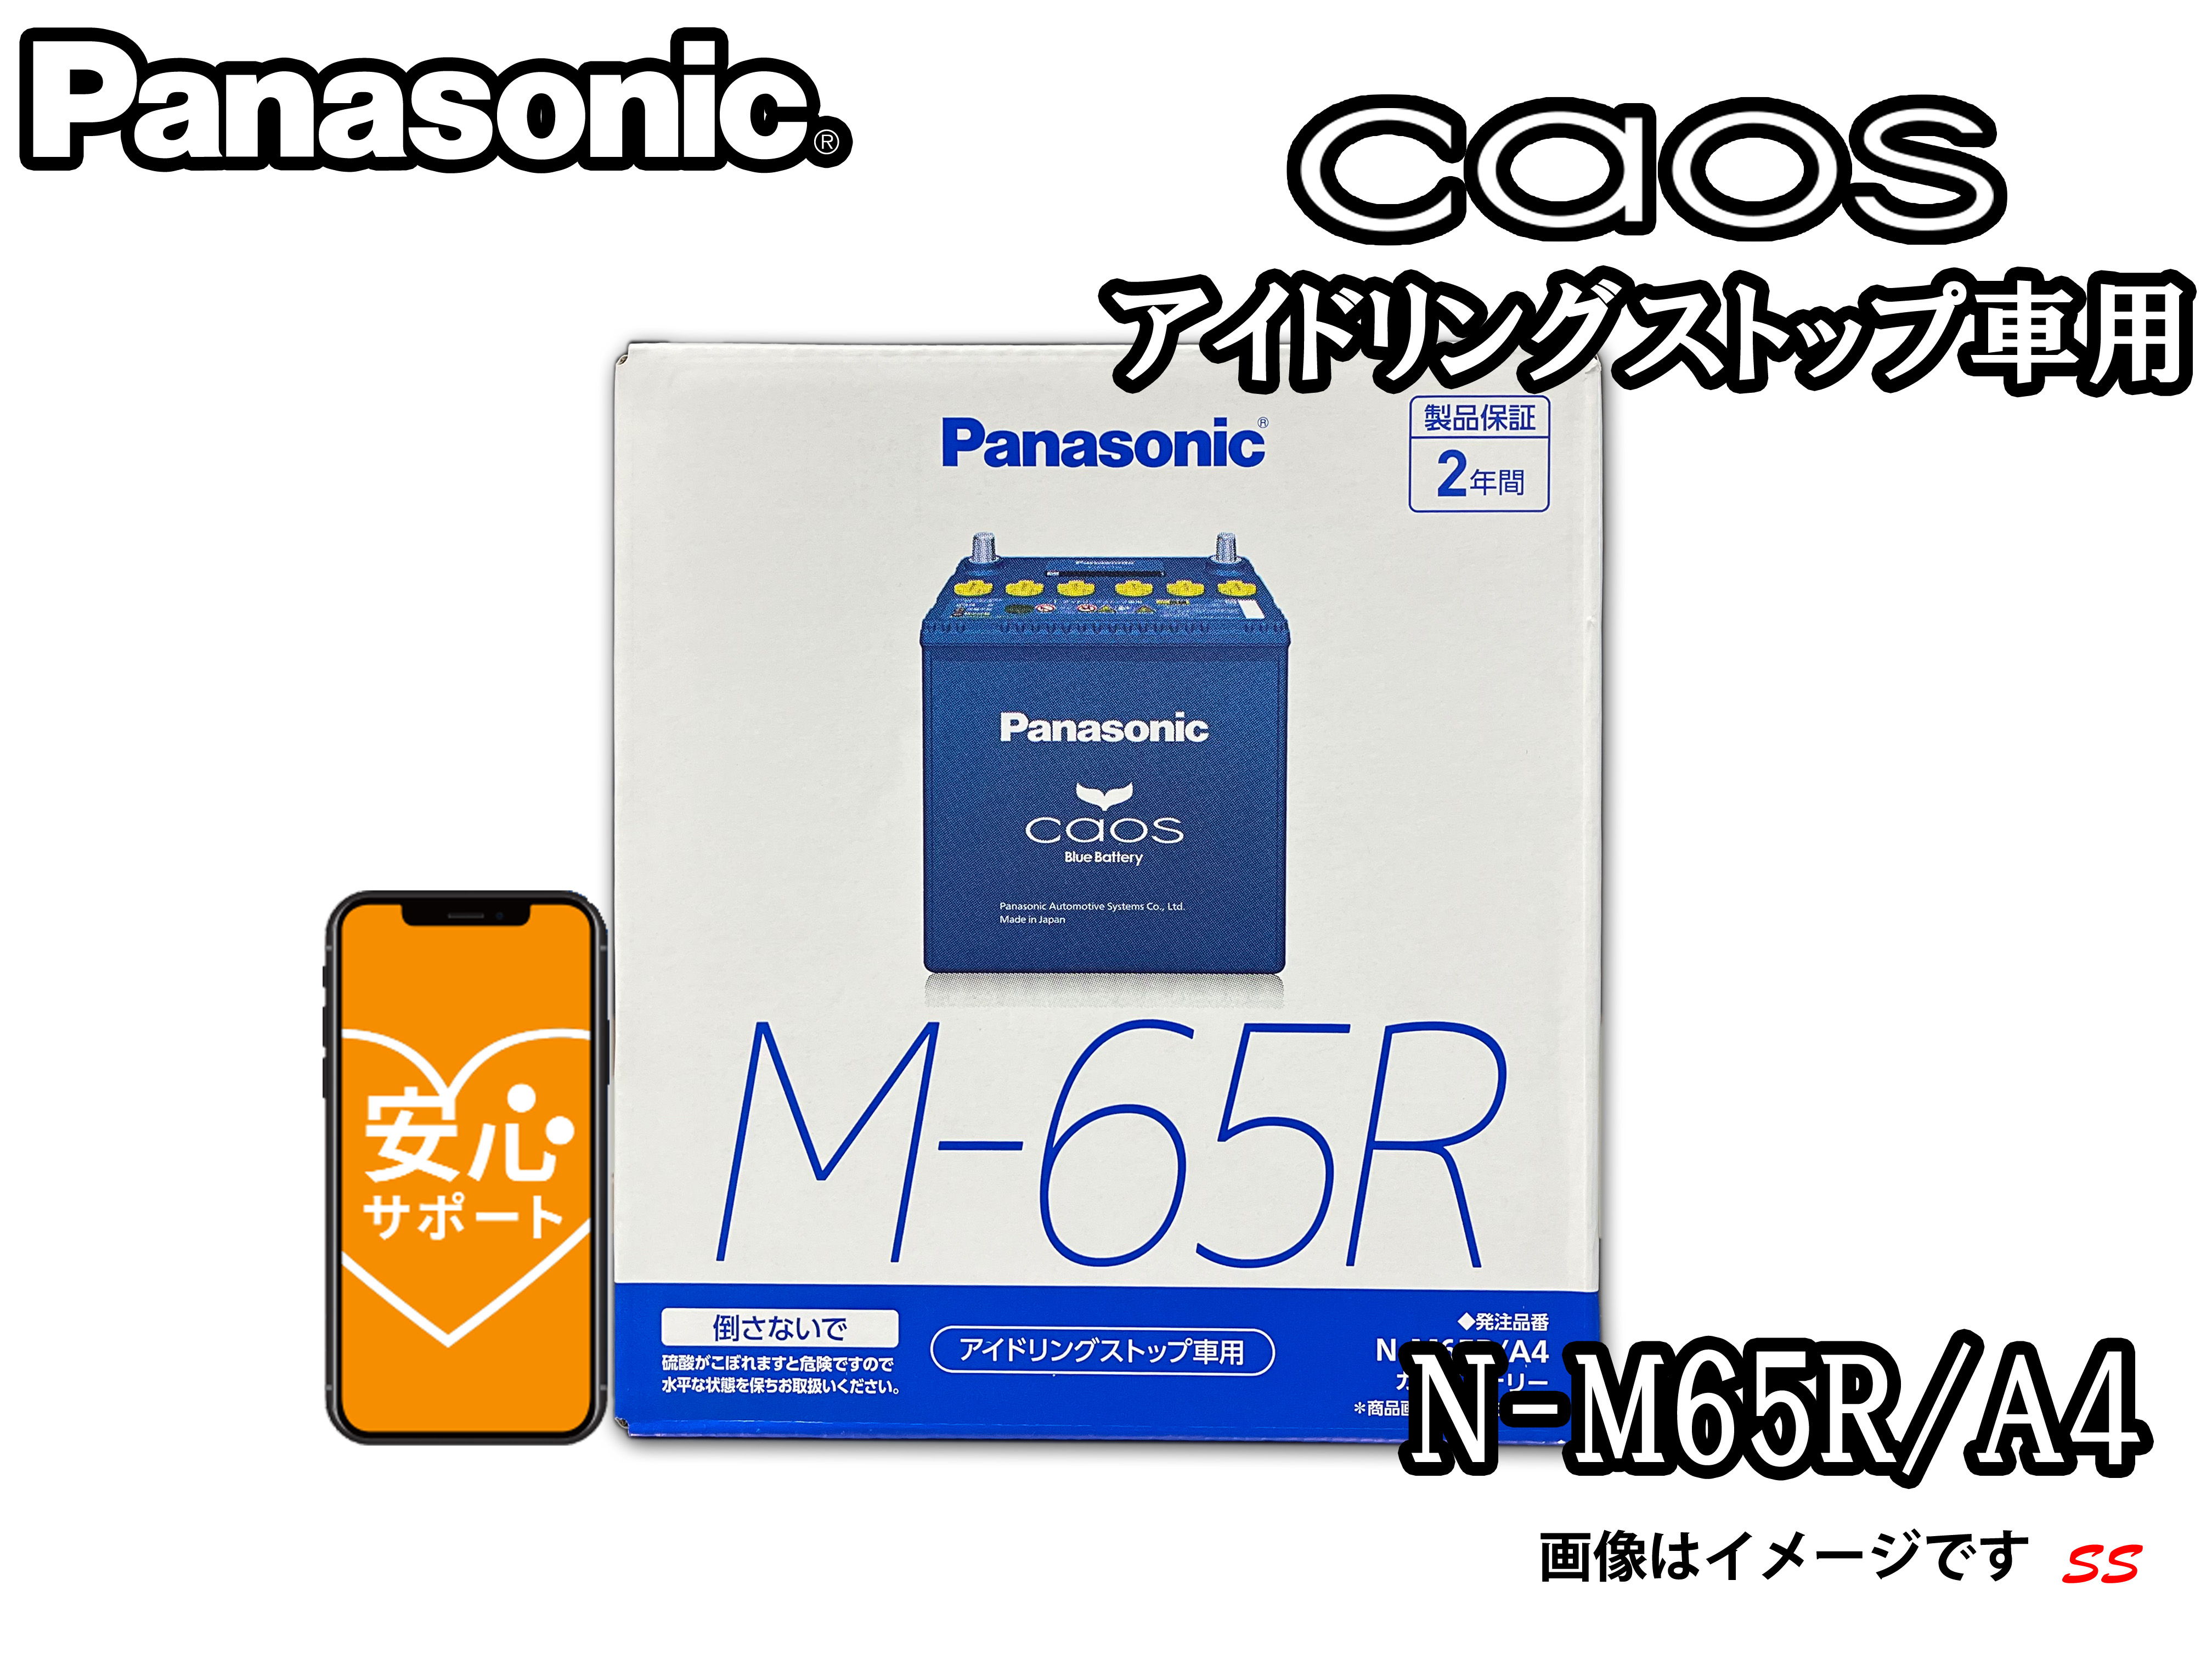 Panasonic / Sonic Speed(ソニックスピード)